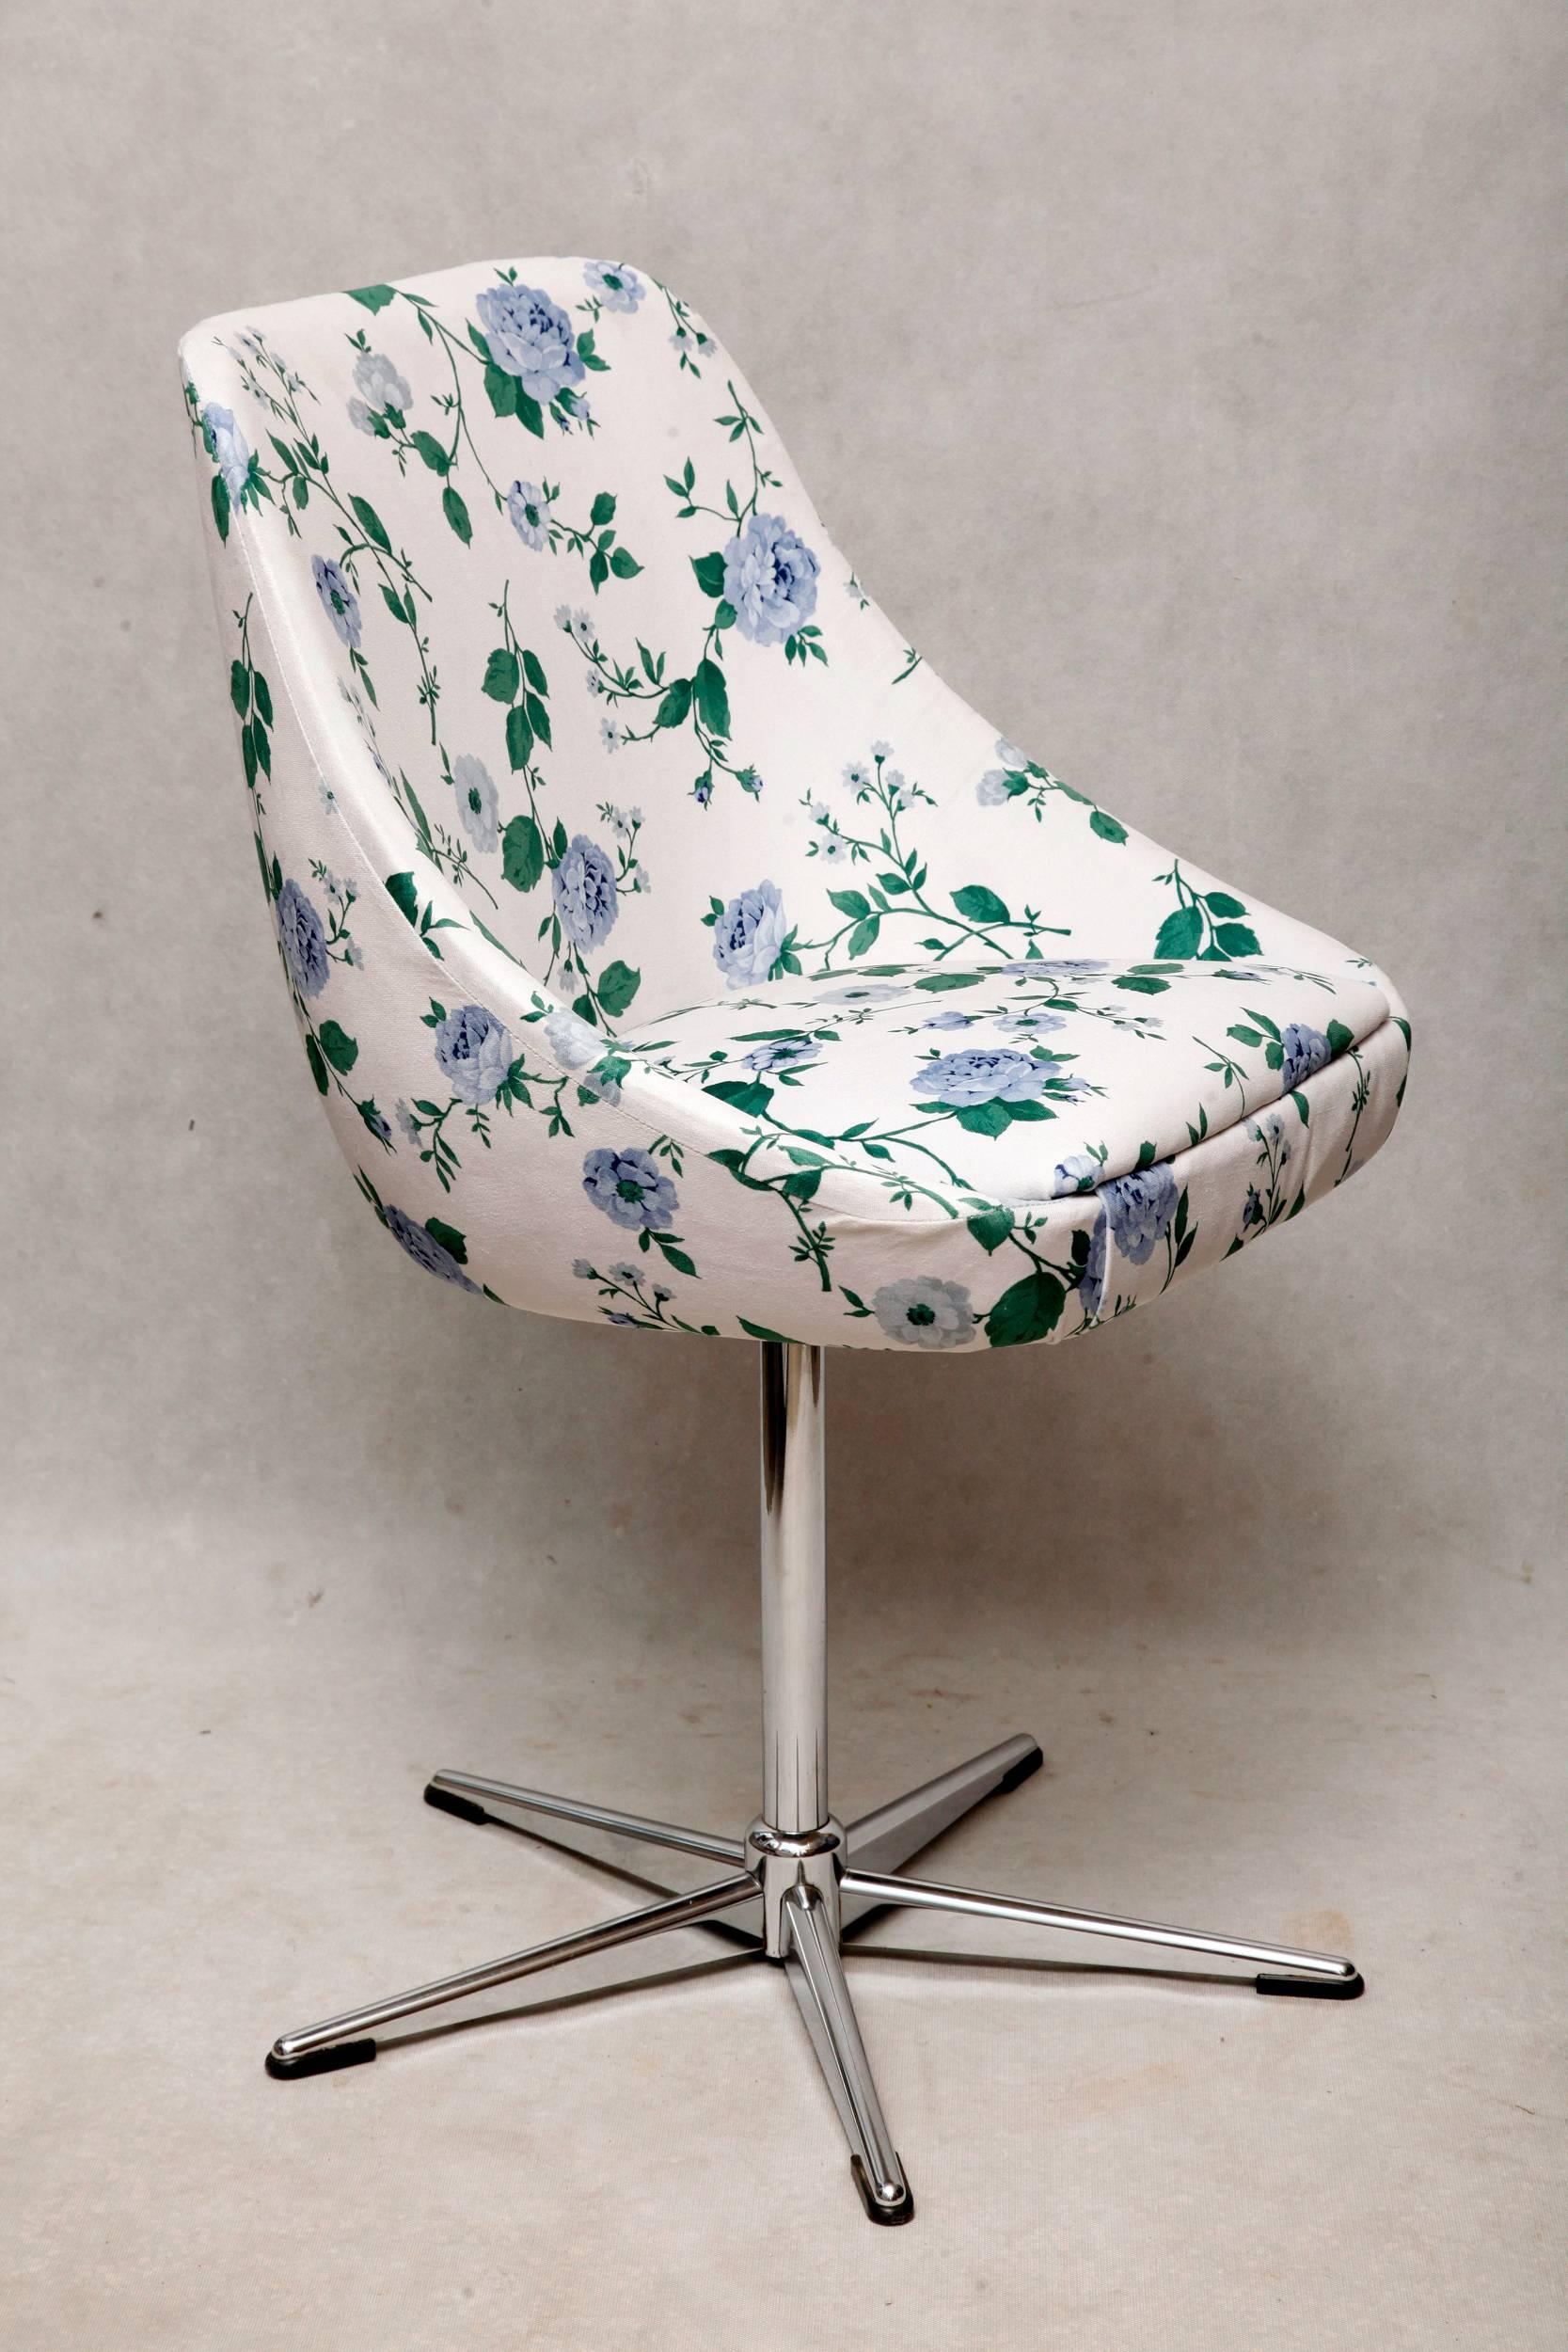 Plush Swivel Chair, Chrome, White and Floar, Poland, 1970s For Sale 3